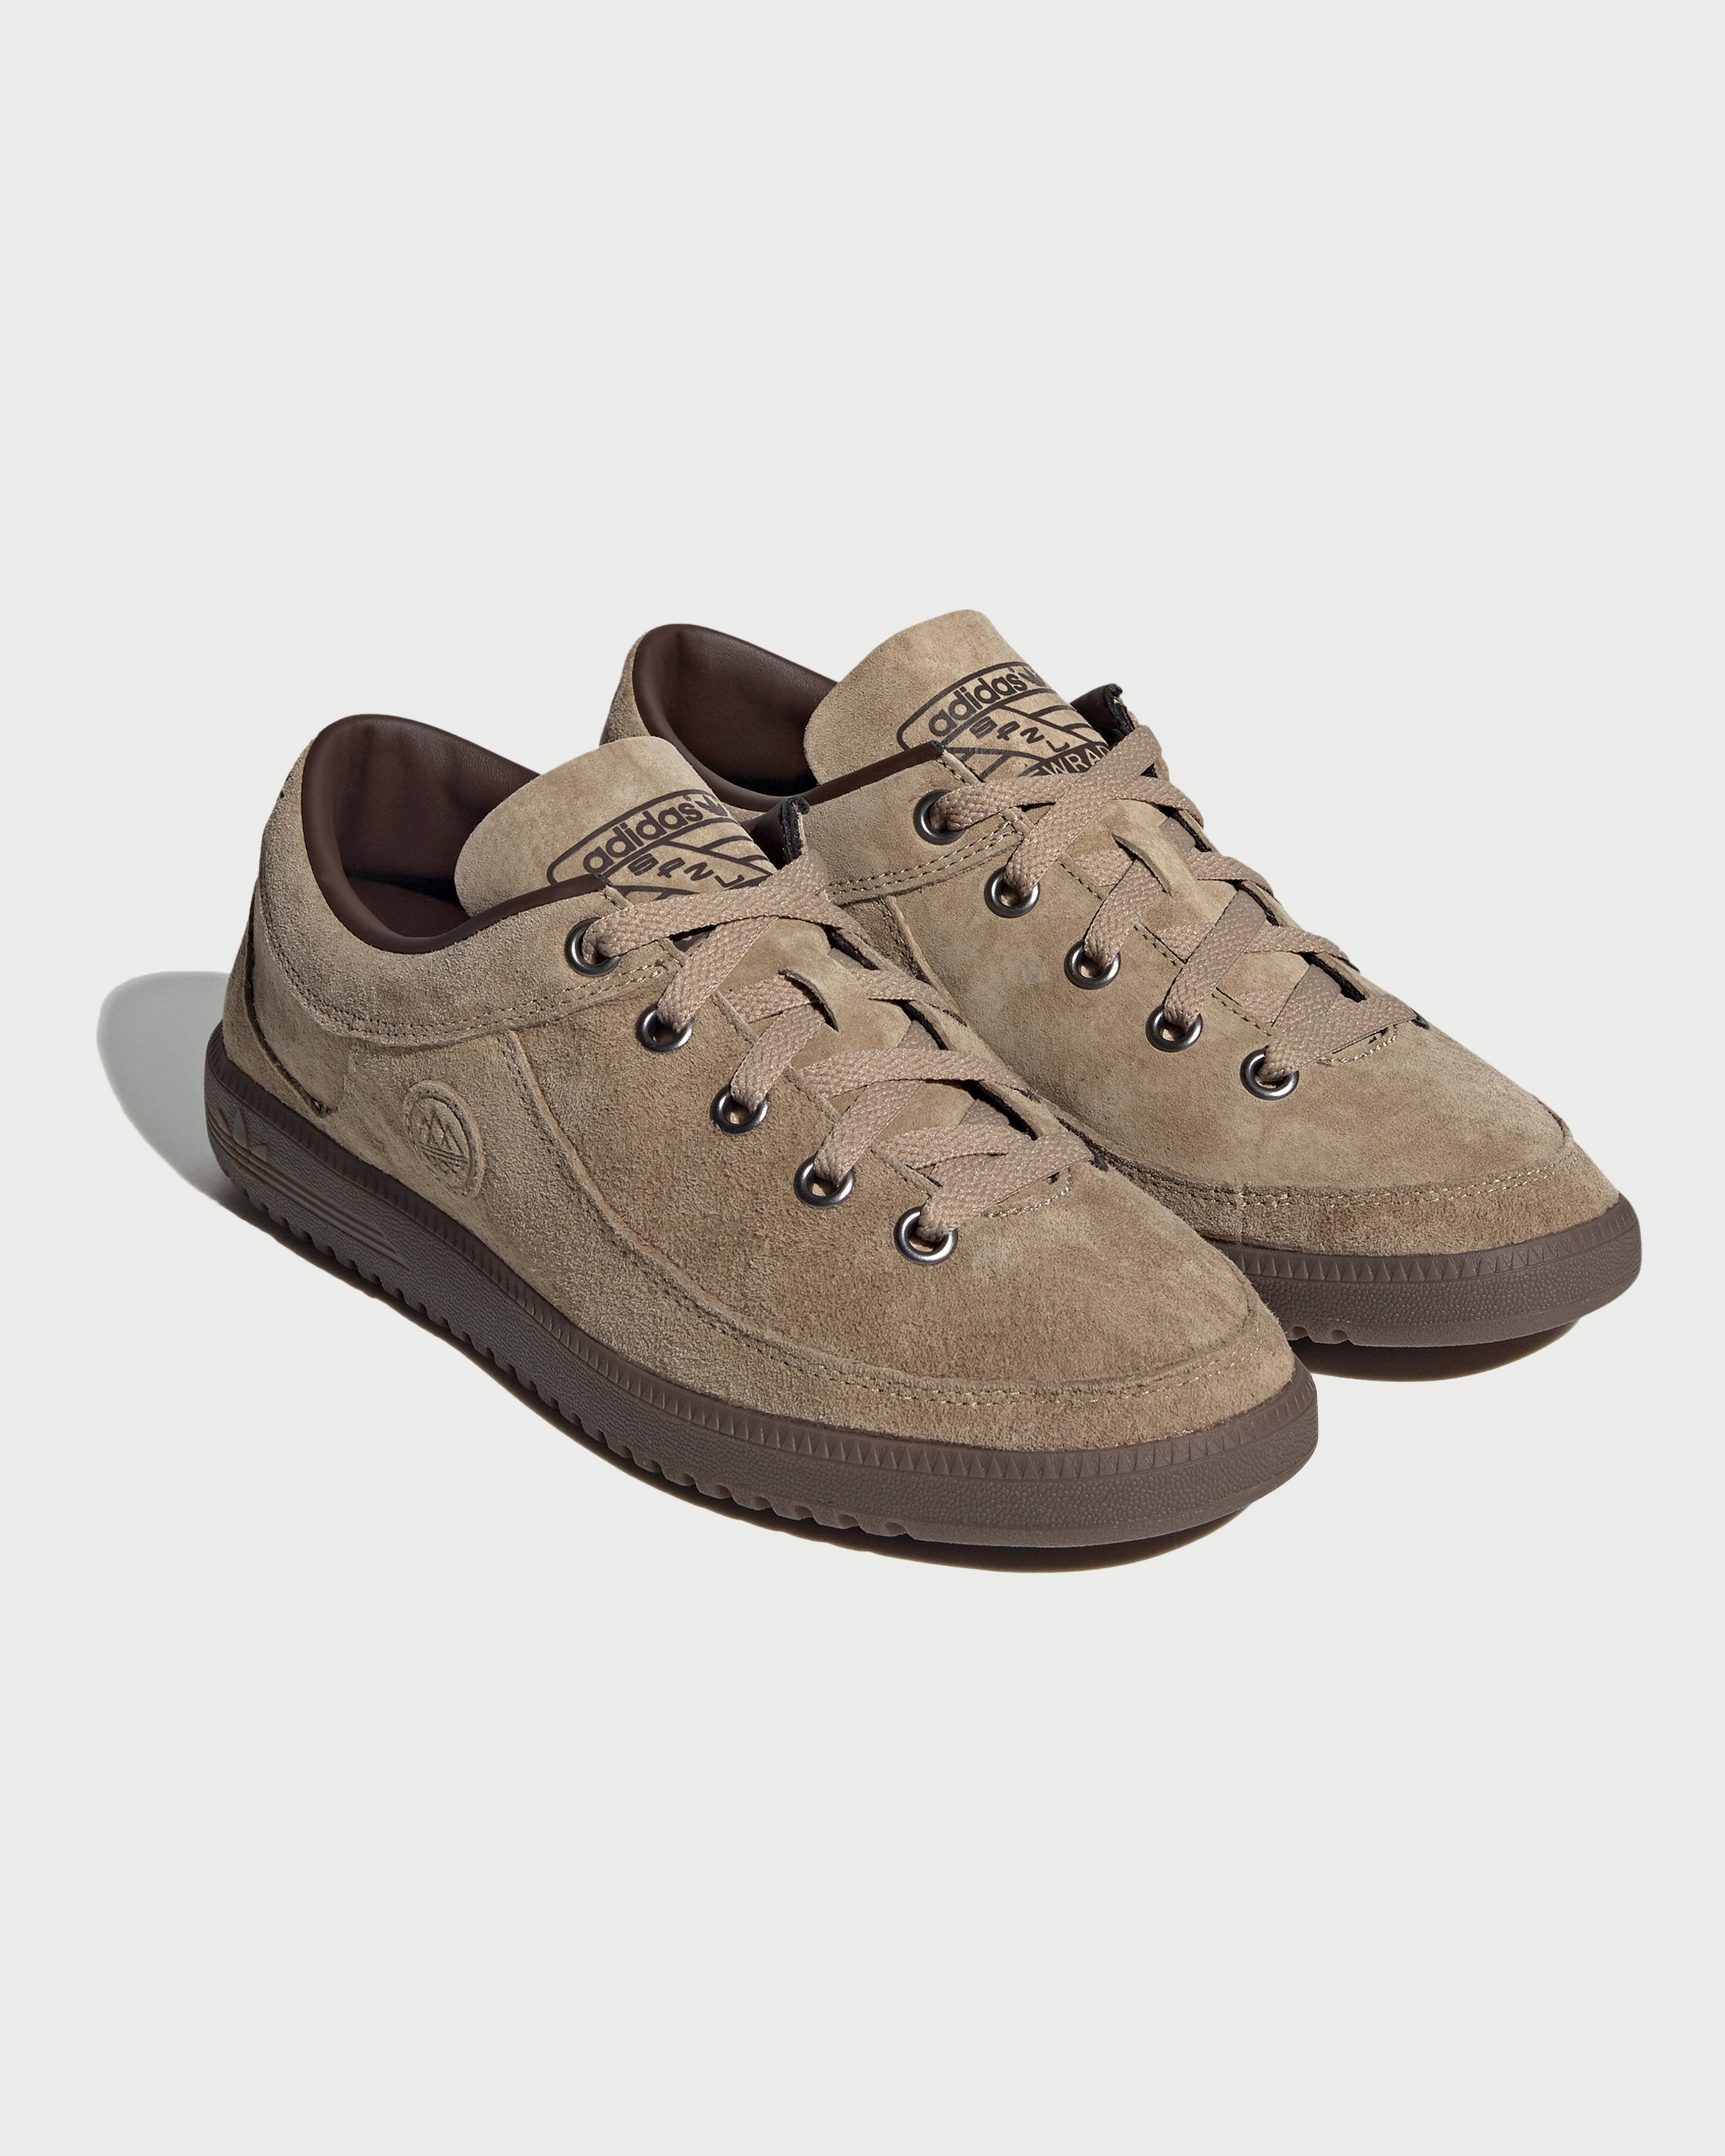 Adidas – Newrad Spezial Brown - Low Top Sneakers - Brown - Image 2